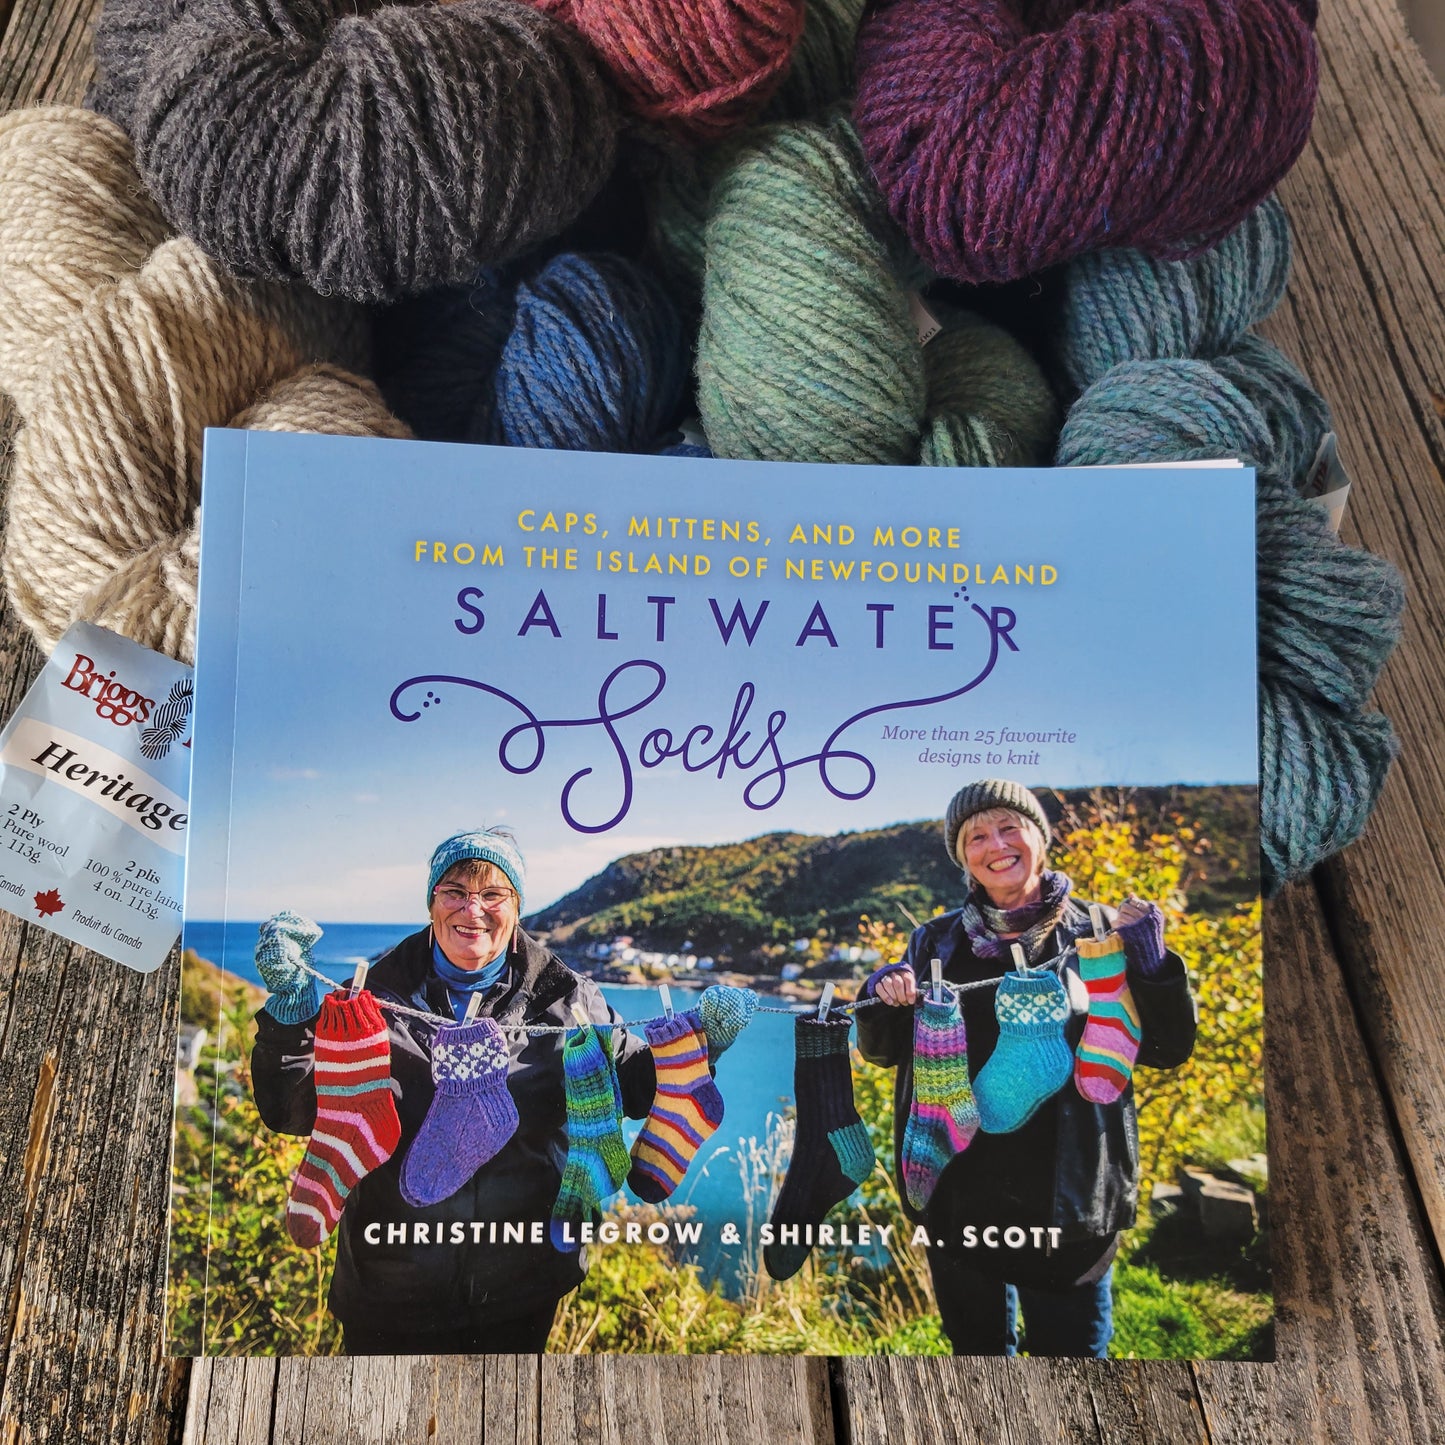 Saltwater Socks by Christine Legrow & Shirley A. Scott